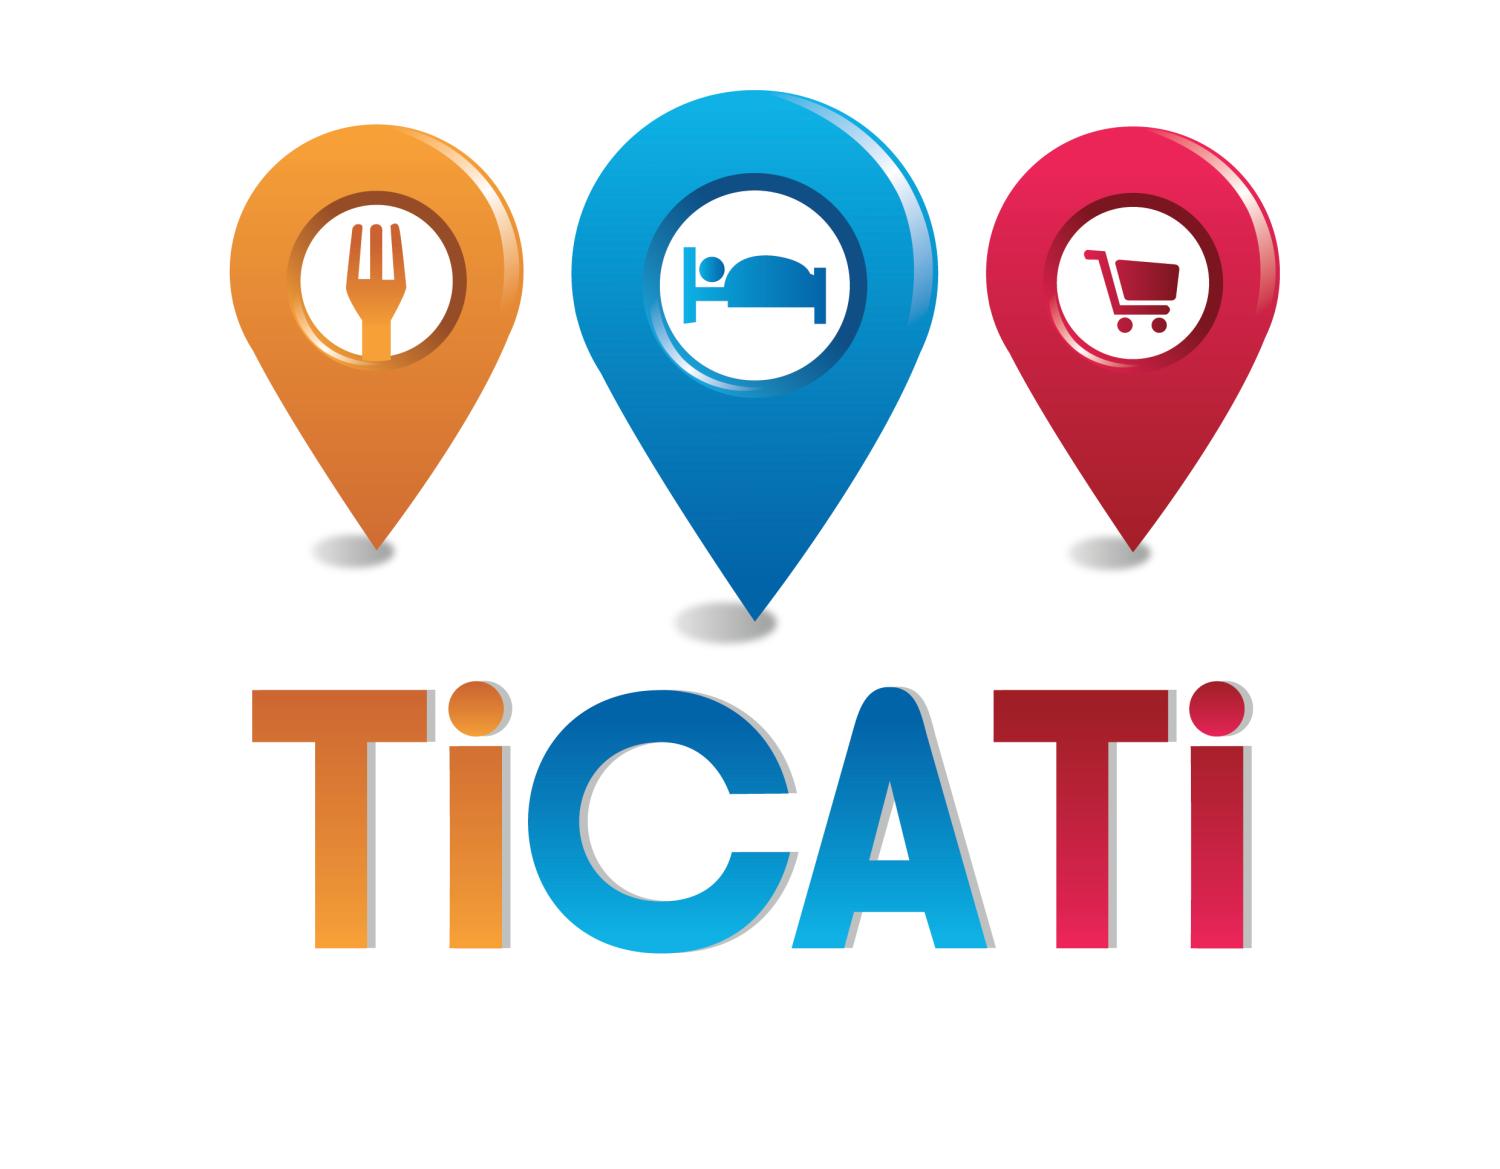 TiCaTi.com